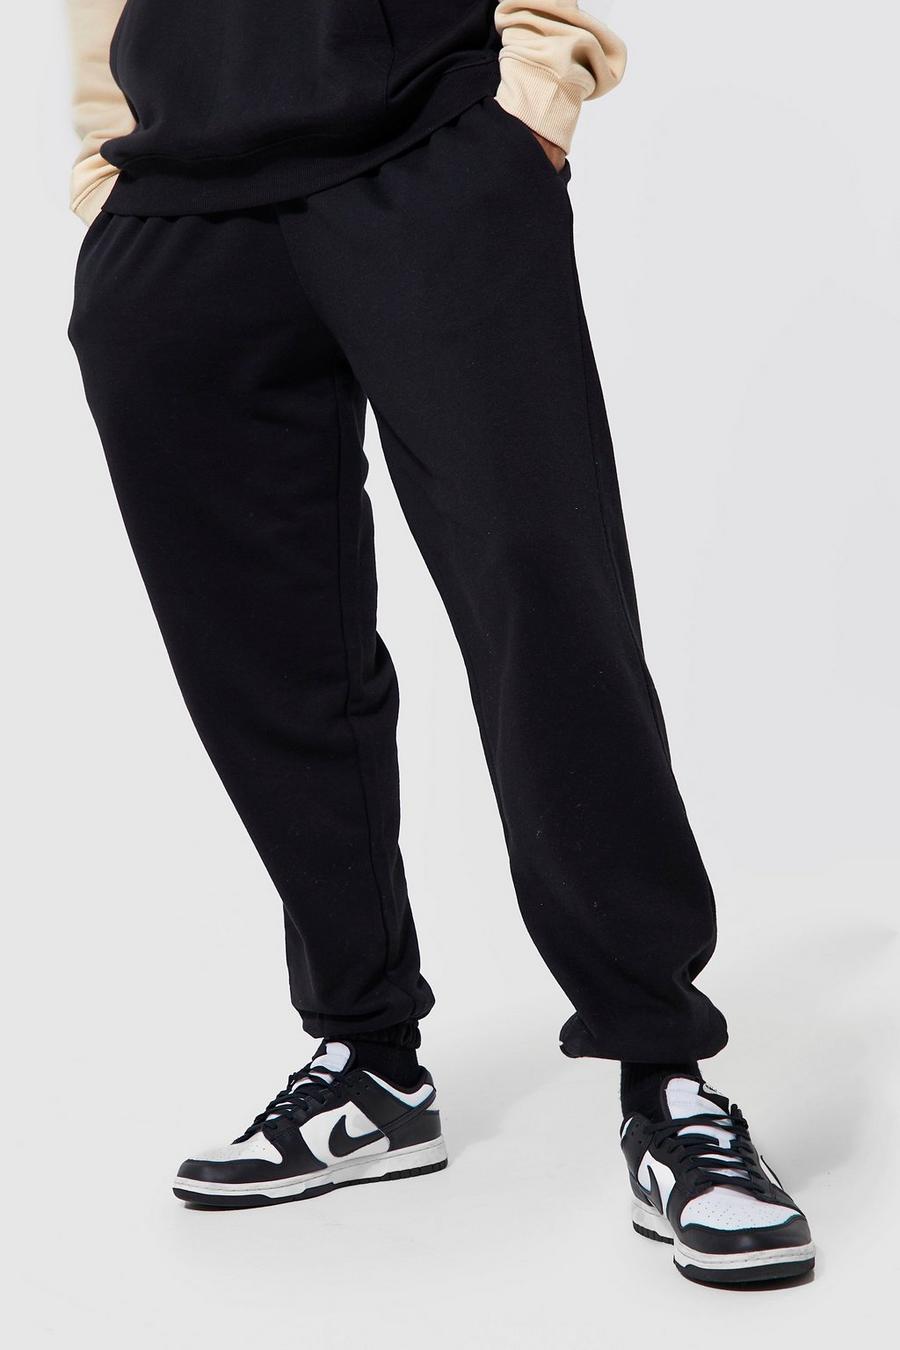 Black nero מכנסי ריצה בייסיק בגזרה משוחררת ובשילוב כותנת REEL, לגברים גבוהים